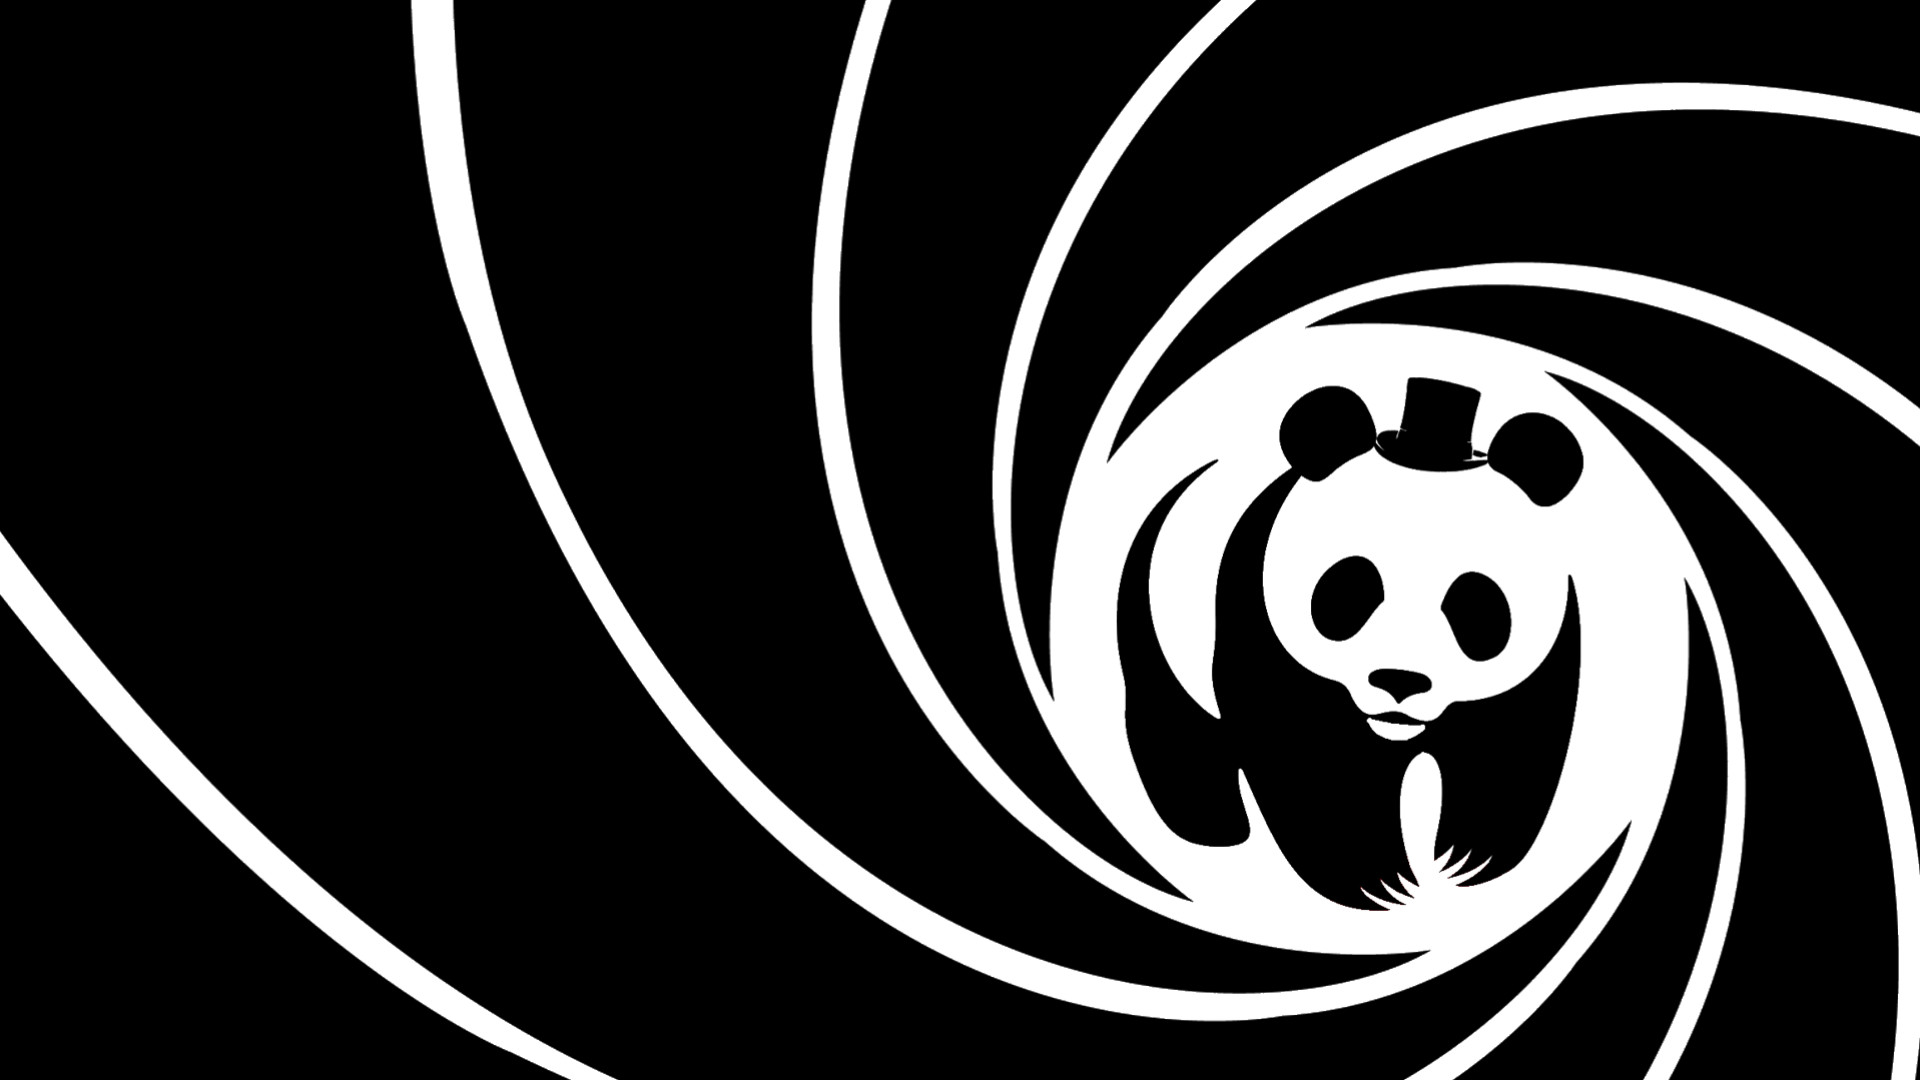 Top anime panda wallpaper images wallpapers – Panda Wallpapers Hd Download Free. Download